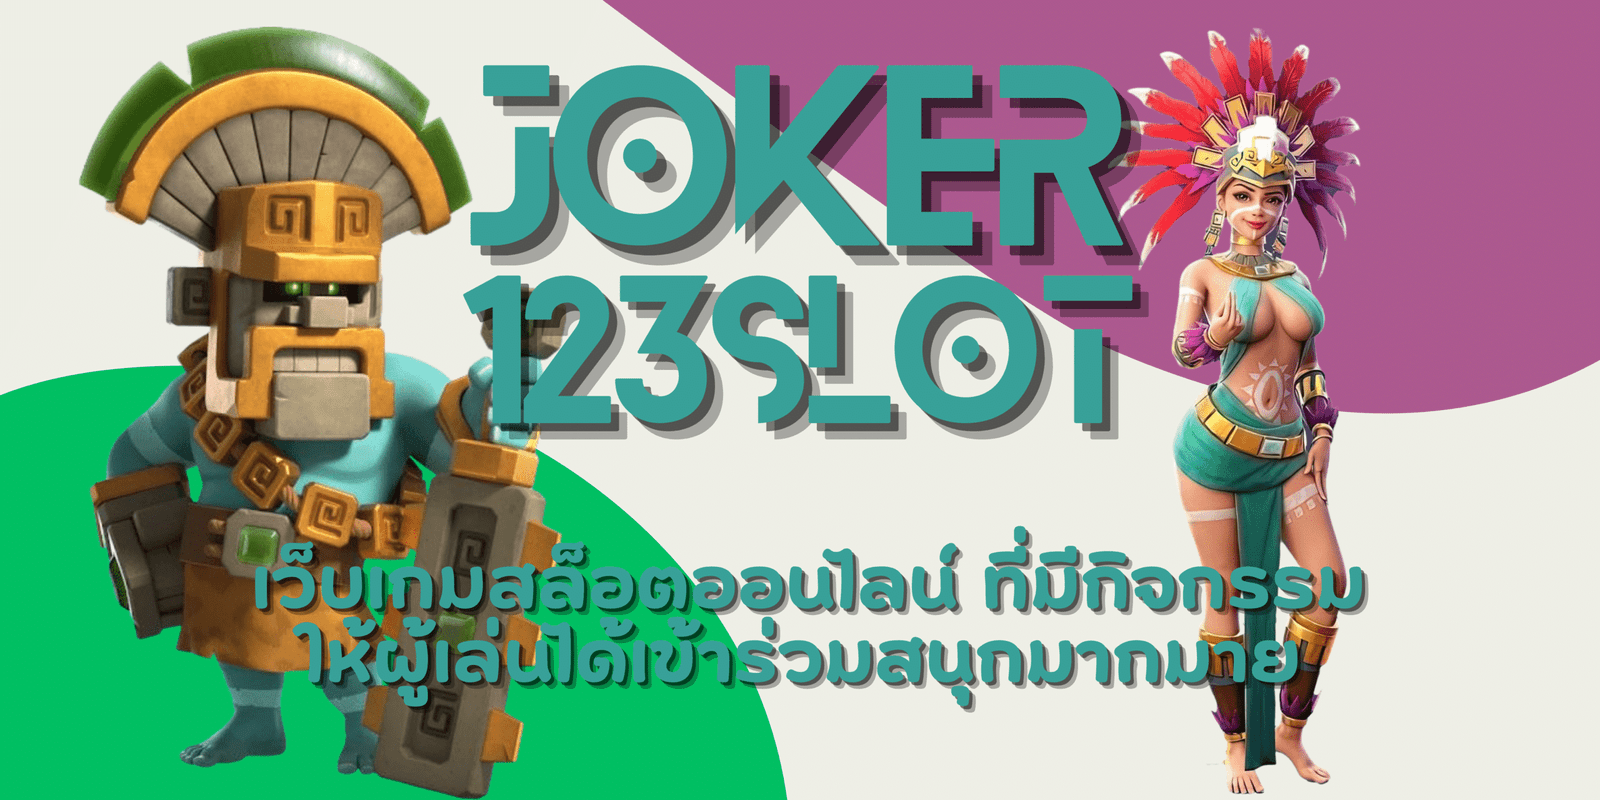 joker-123slot-สมัครสมาชิก